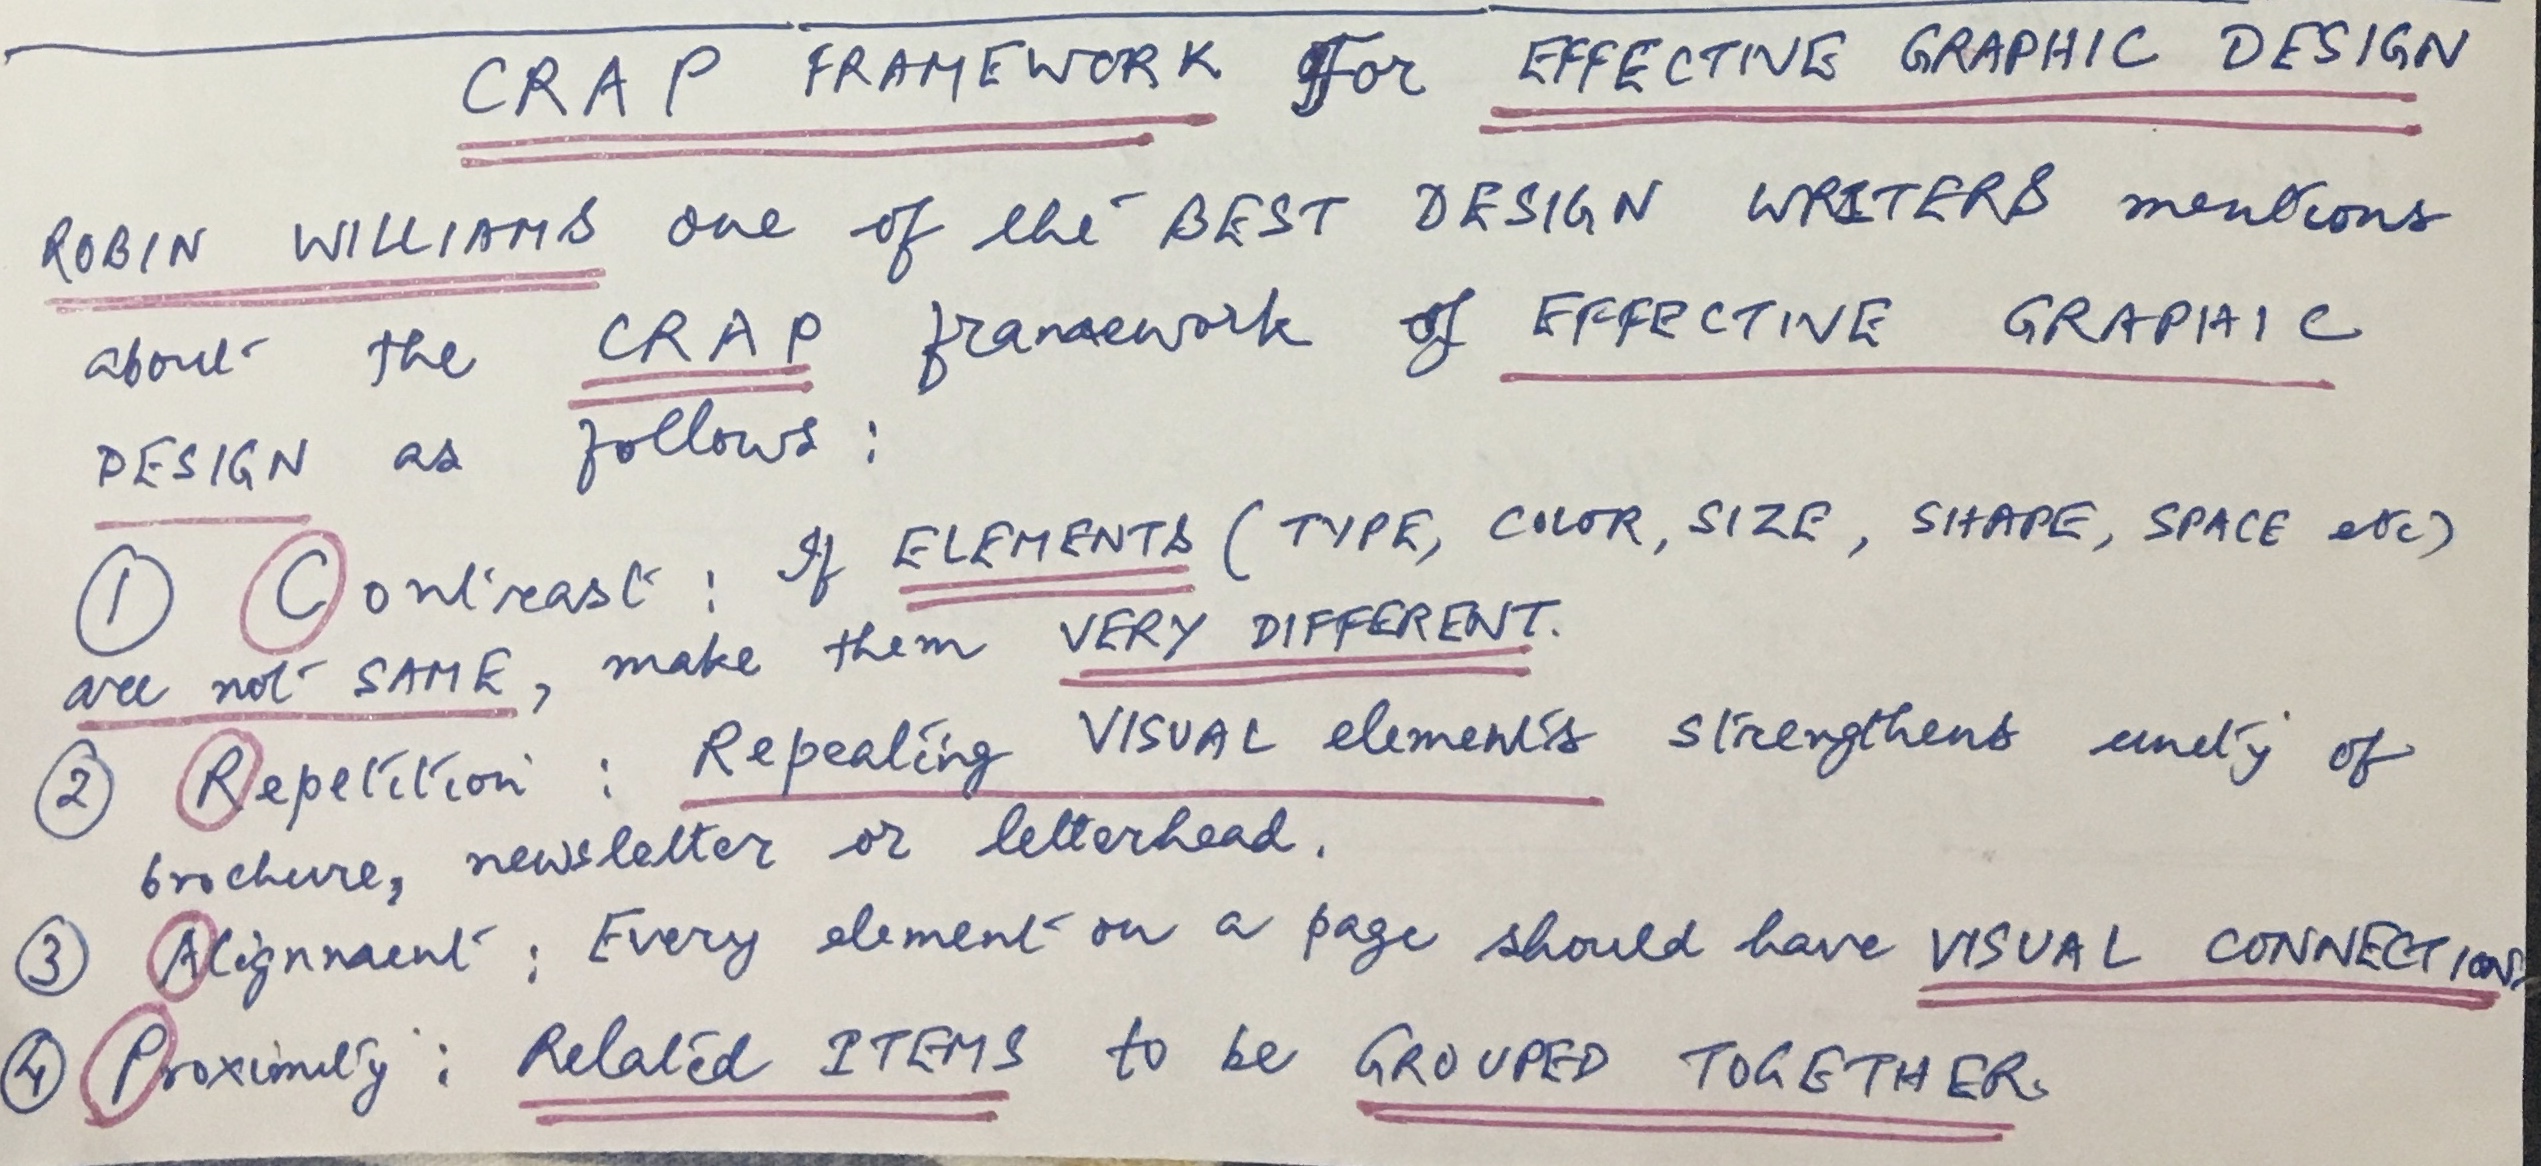 CRAP Framework for Effective Graphic Design